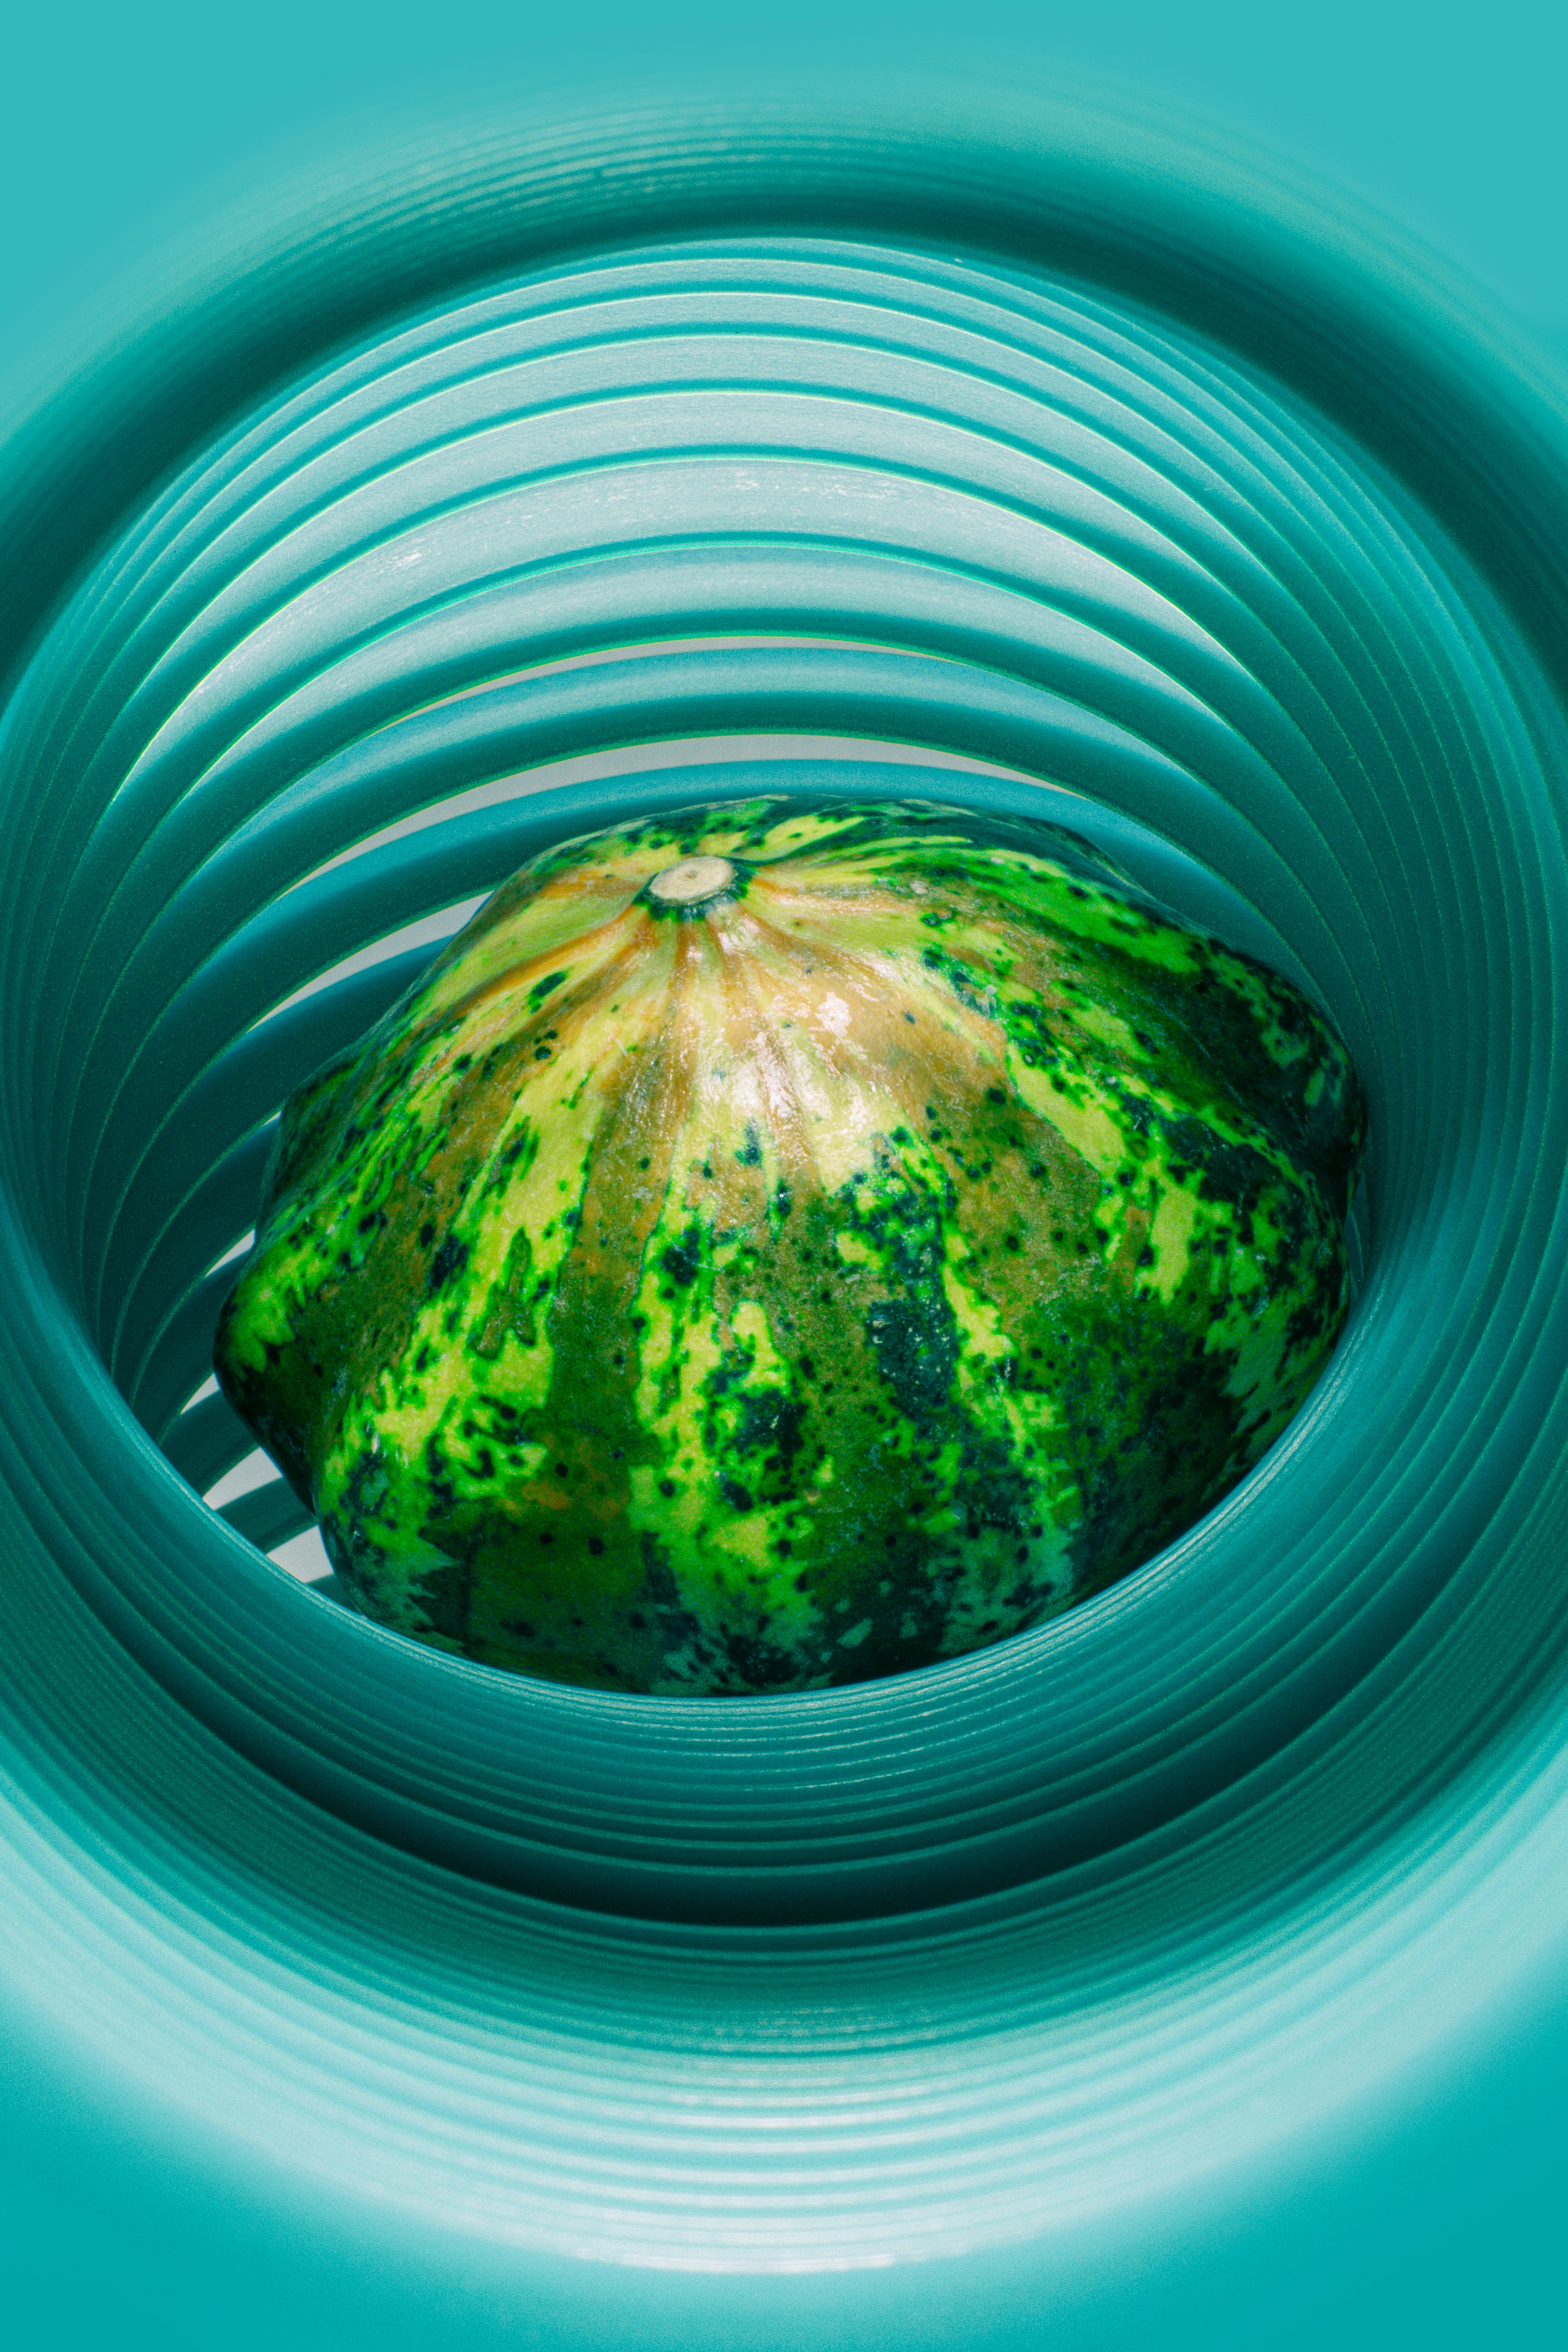 alien egg on circular tunnel